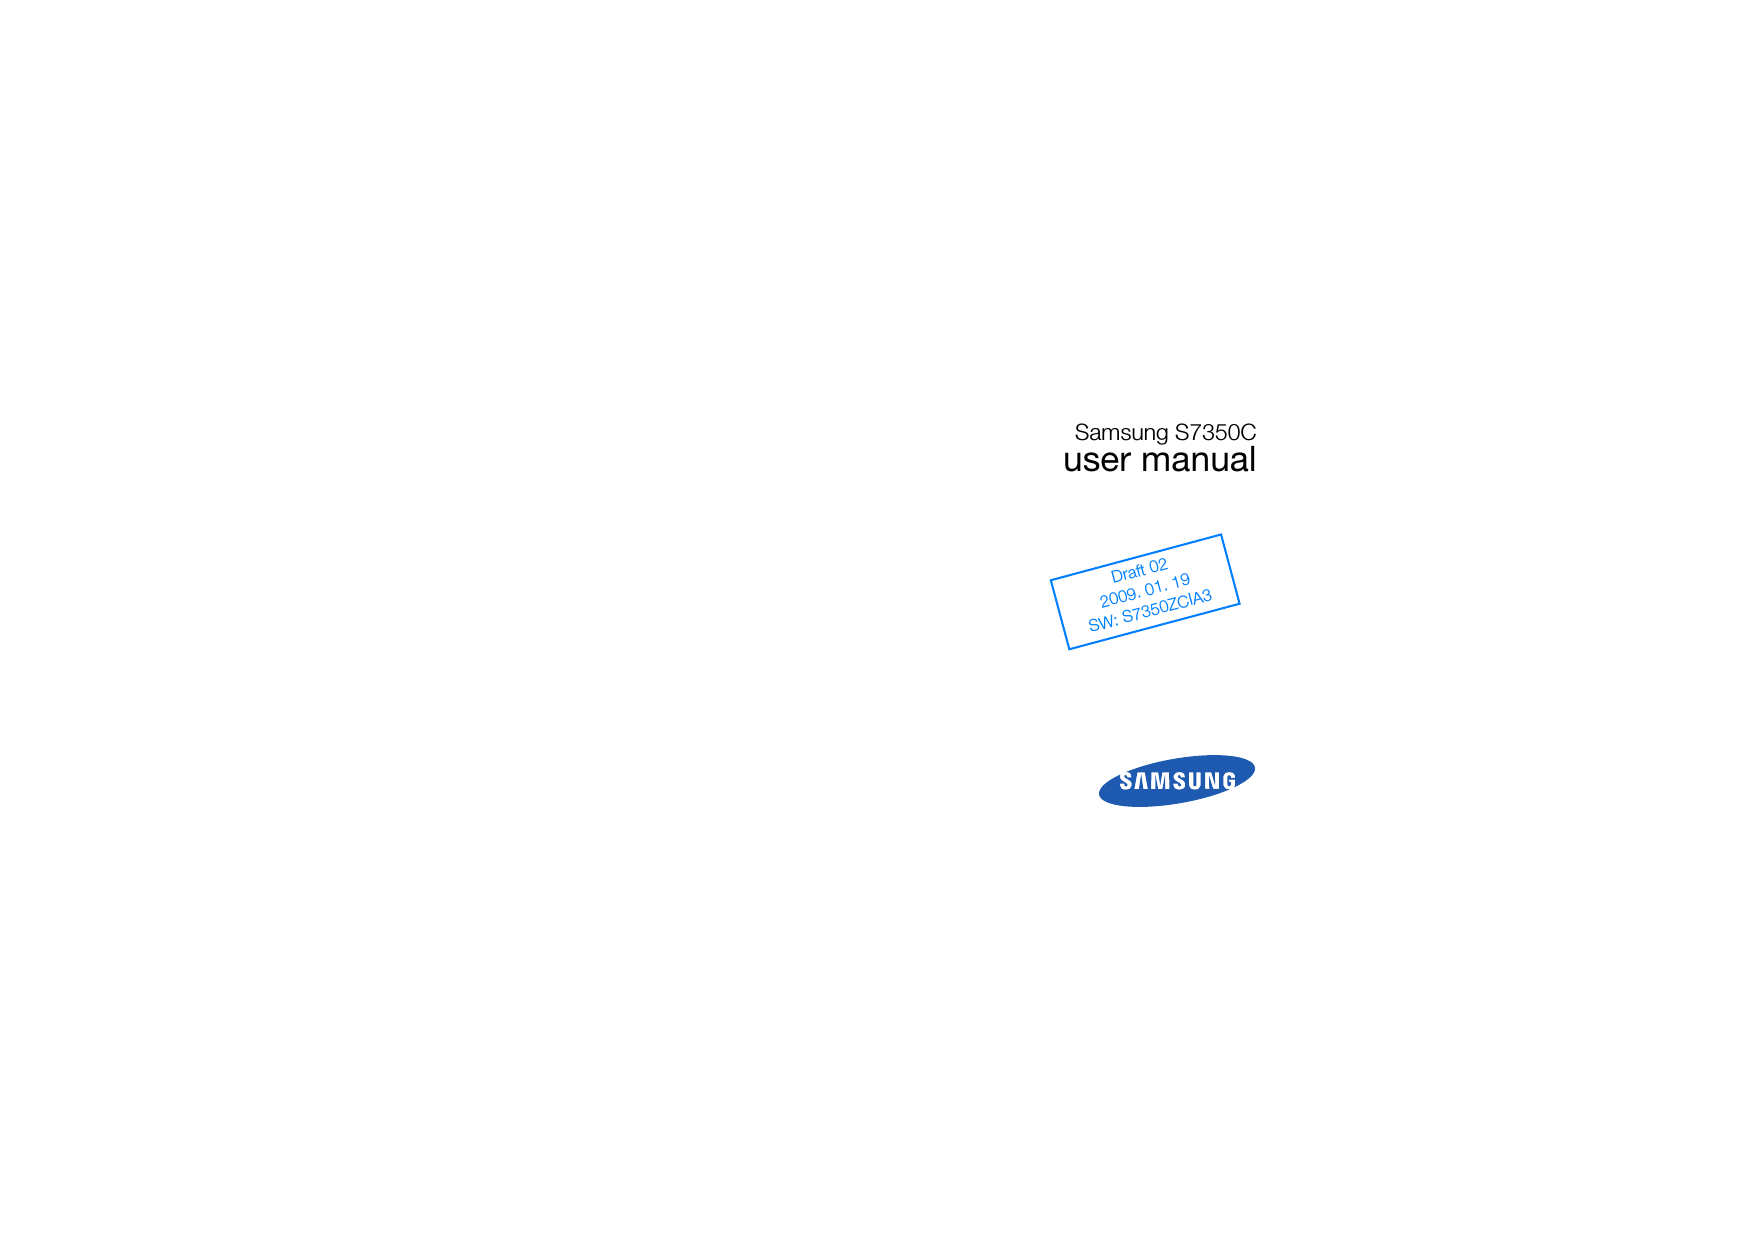 Samsung S7350Cuser manualDraft 022009. 01. 19SW: S7350ZCIA3